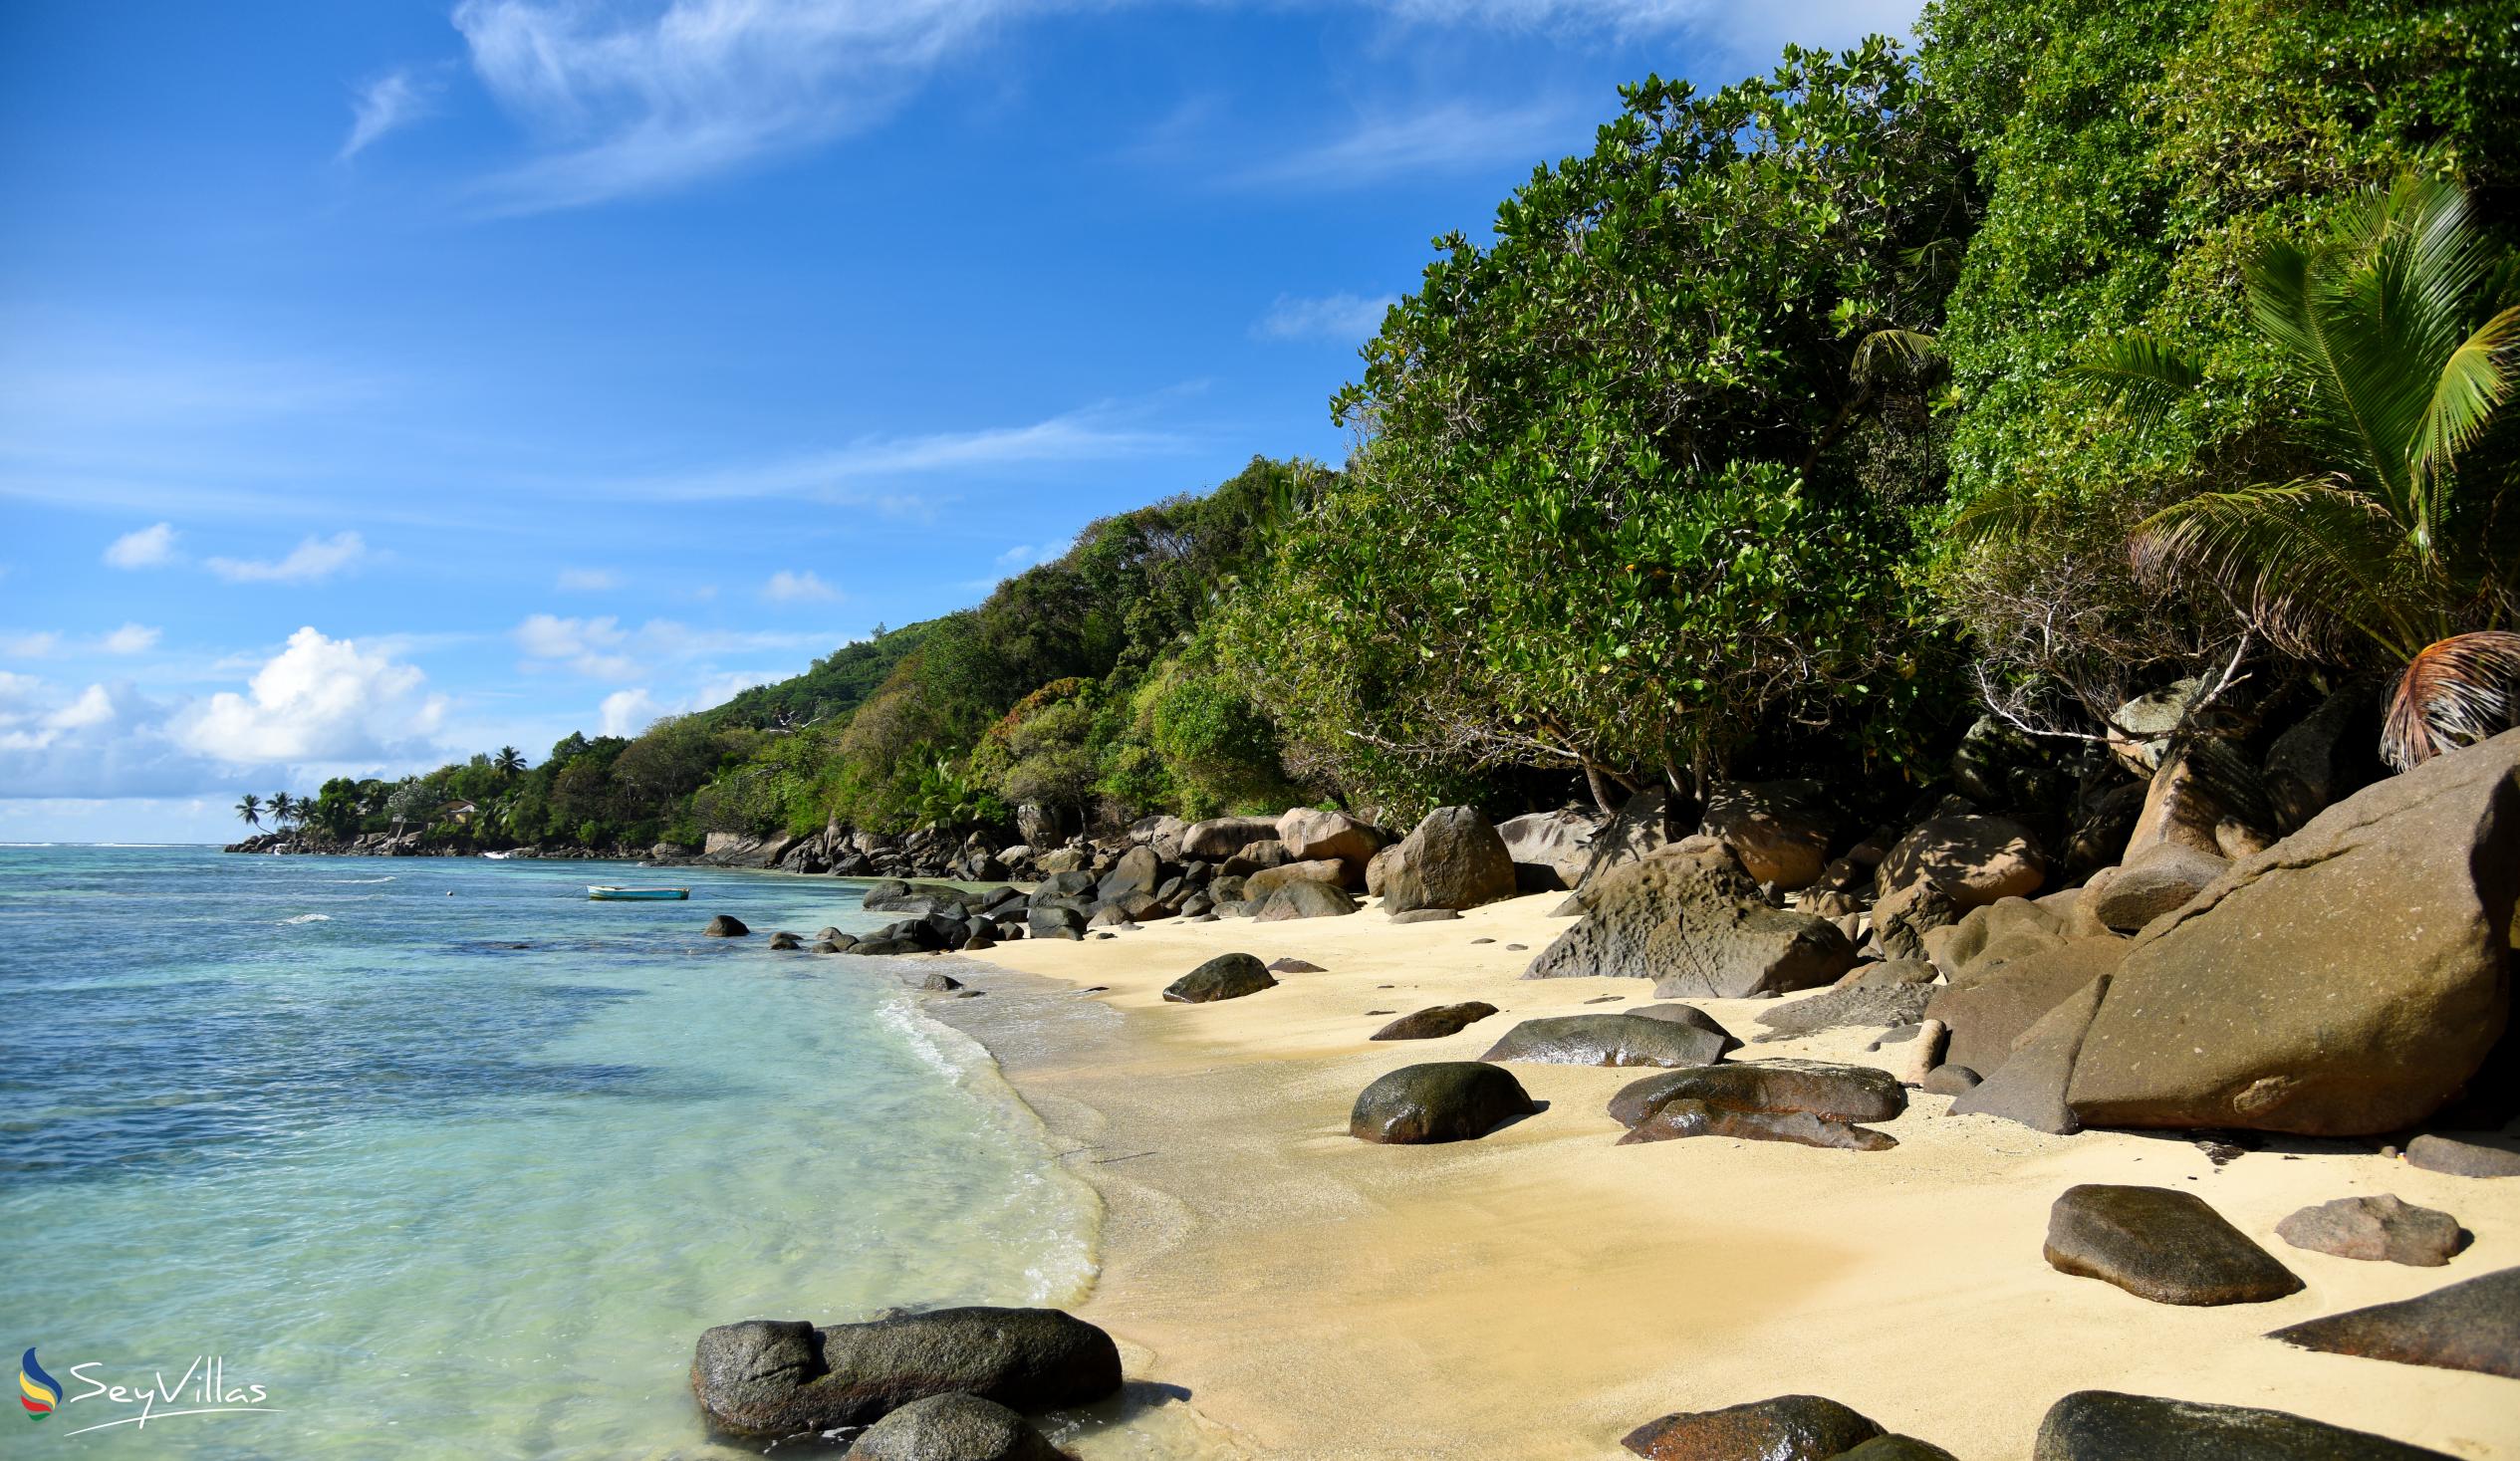 Photo 3: Anse Baleine - Mahé (Seychelles)